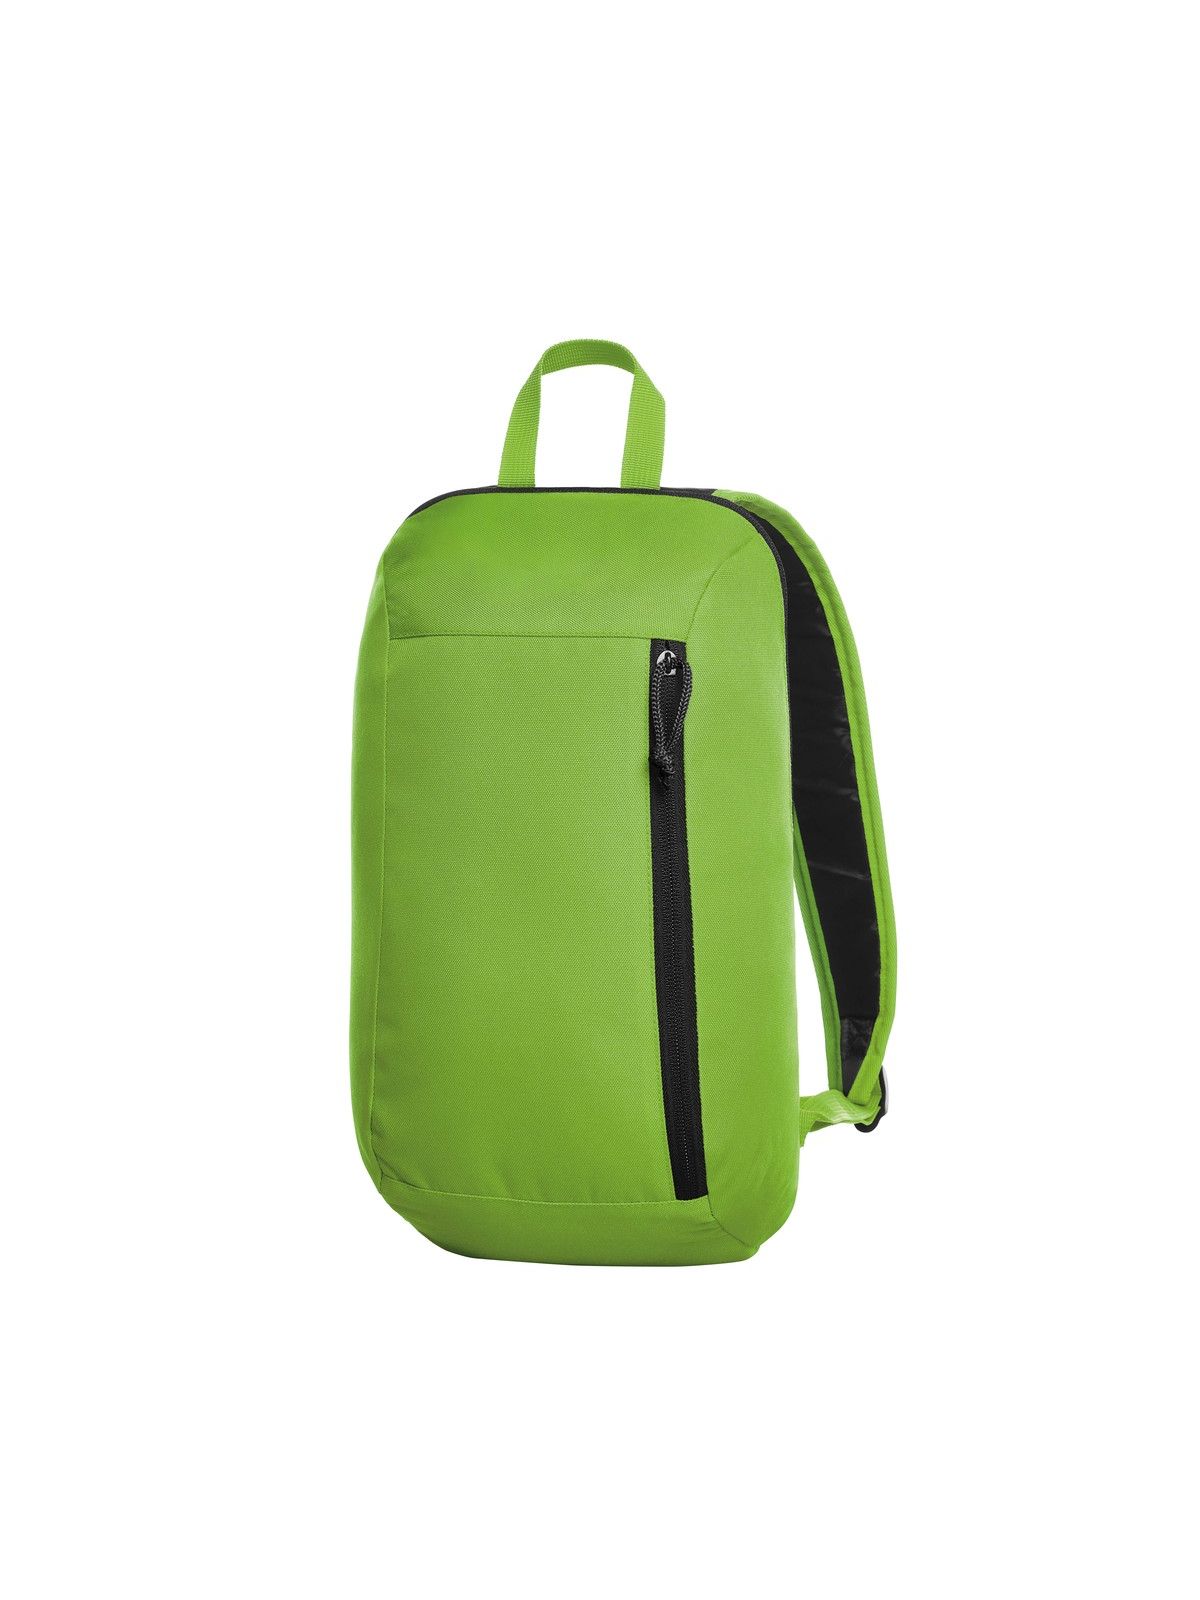 flow-backpack-applegreen.webp